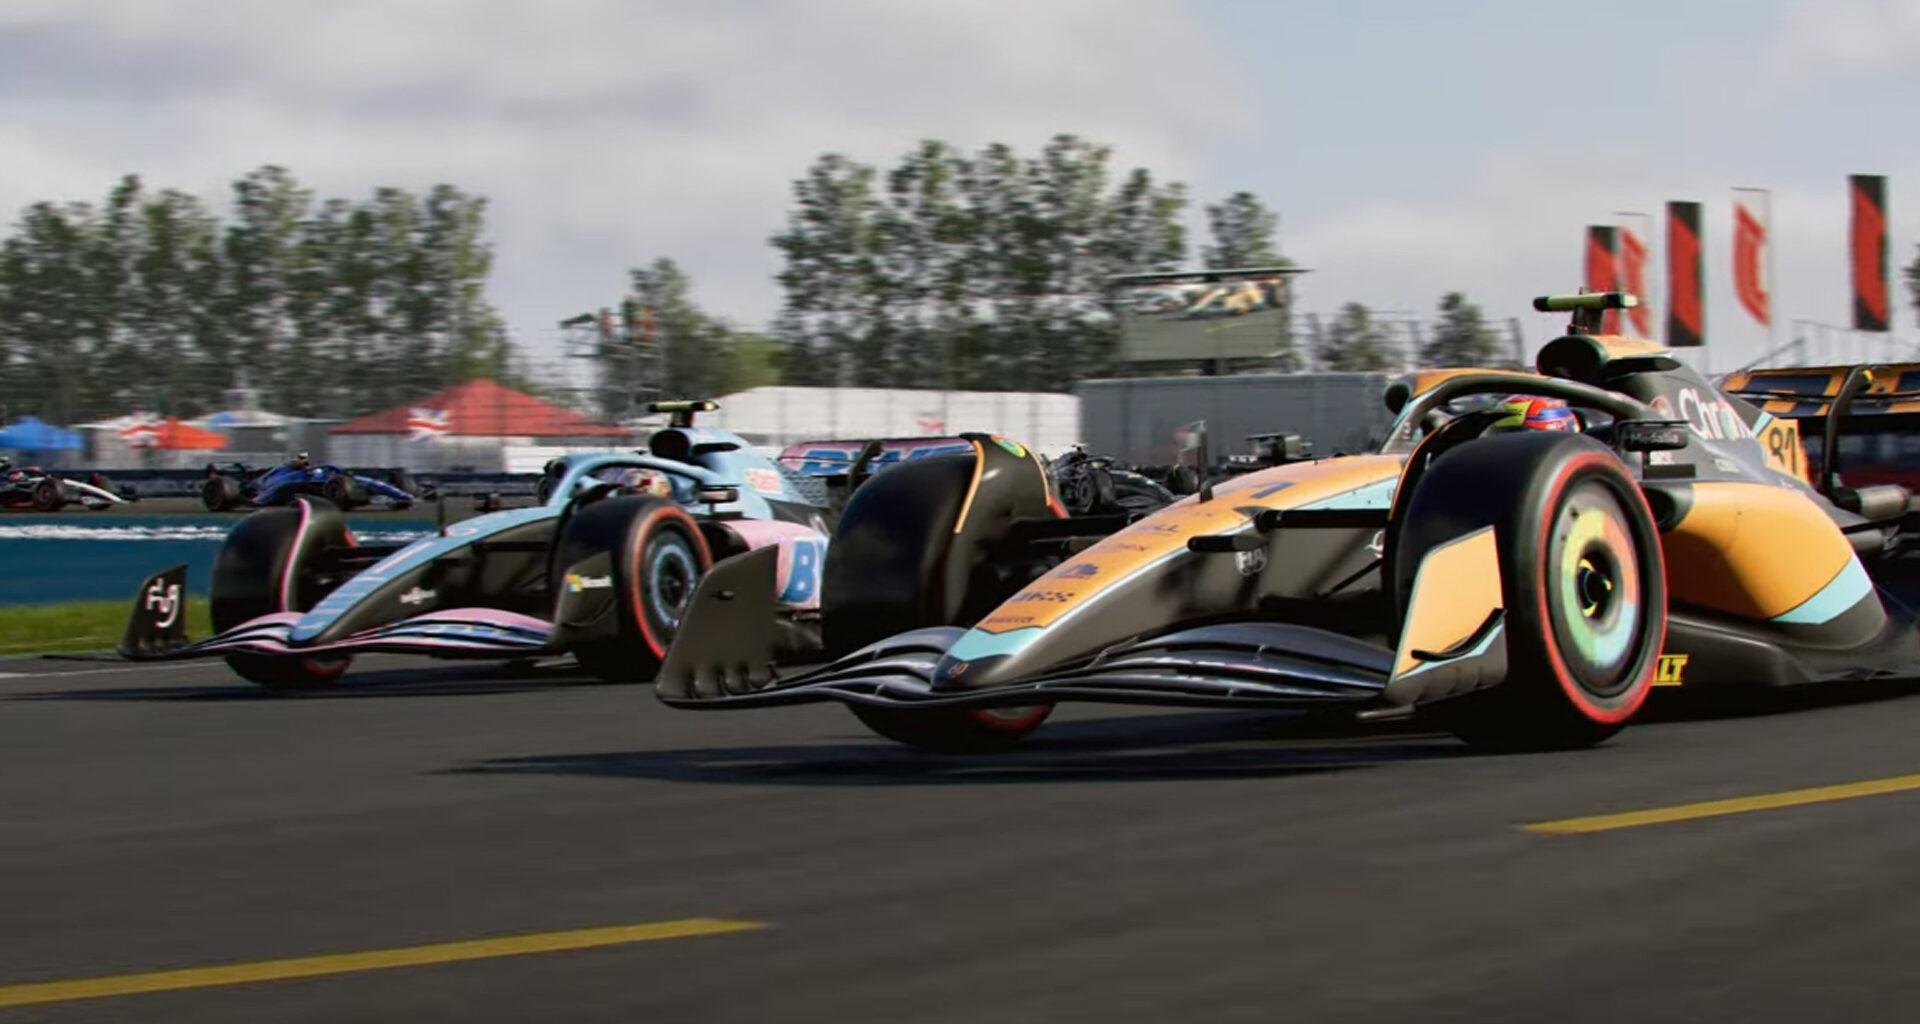 F1 23 updates Red Bull Ring, gameplay showcased, physics explained